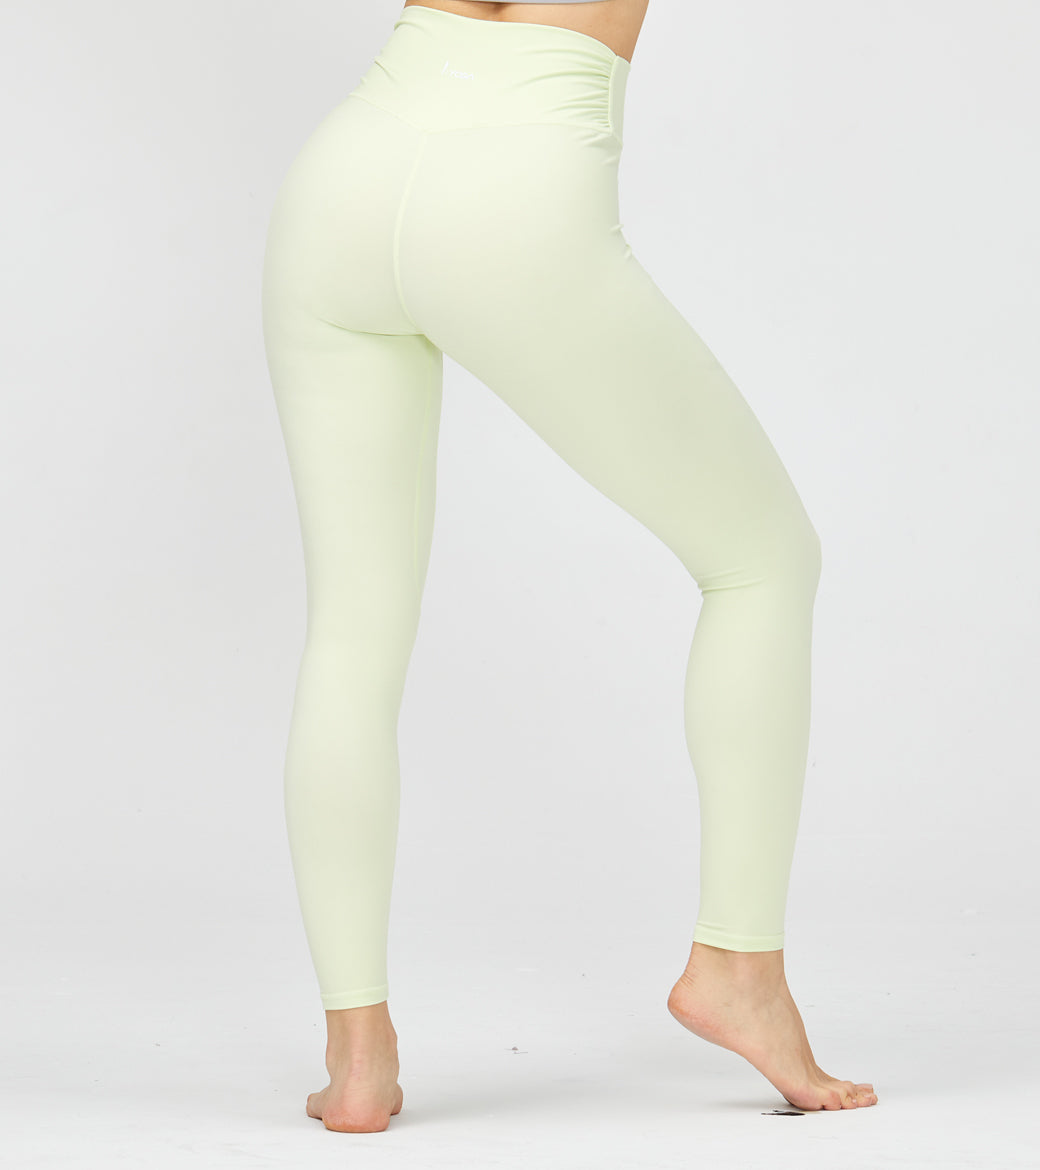 LOVESOFT Women's Bright Green Lycra High Waist Hips Running Yoga Leggings